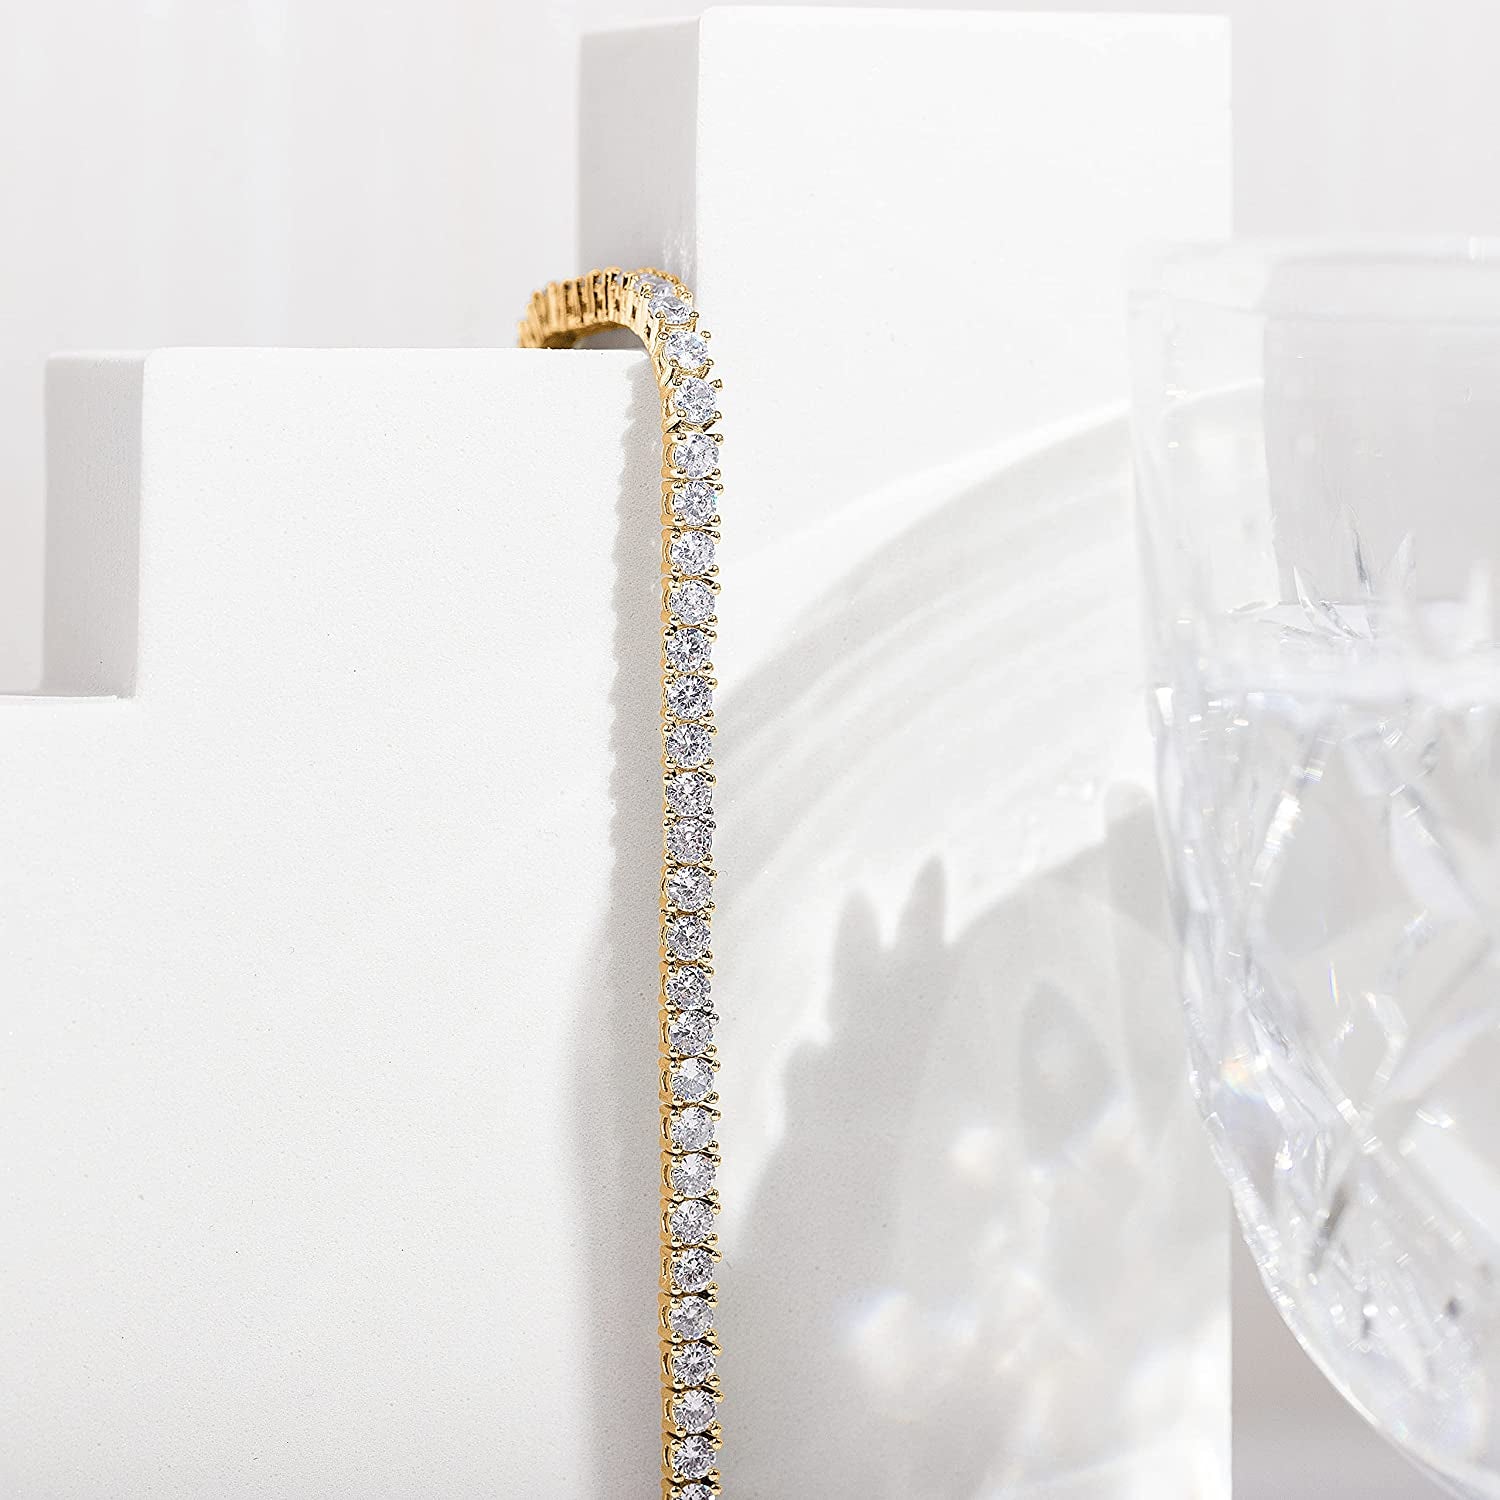 14K Gold Plated 3Mm Cubic Zirconia Classic Tennis Bracelet | Gold Bracelets for Women | Size 6.5-7.5 Inch